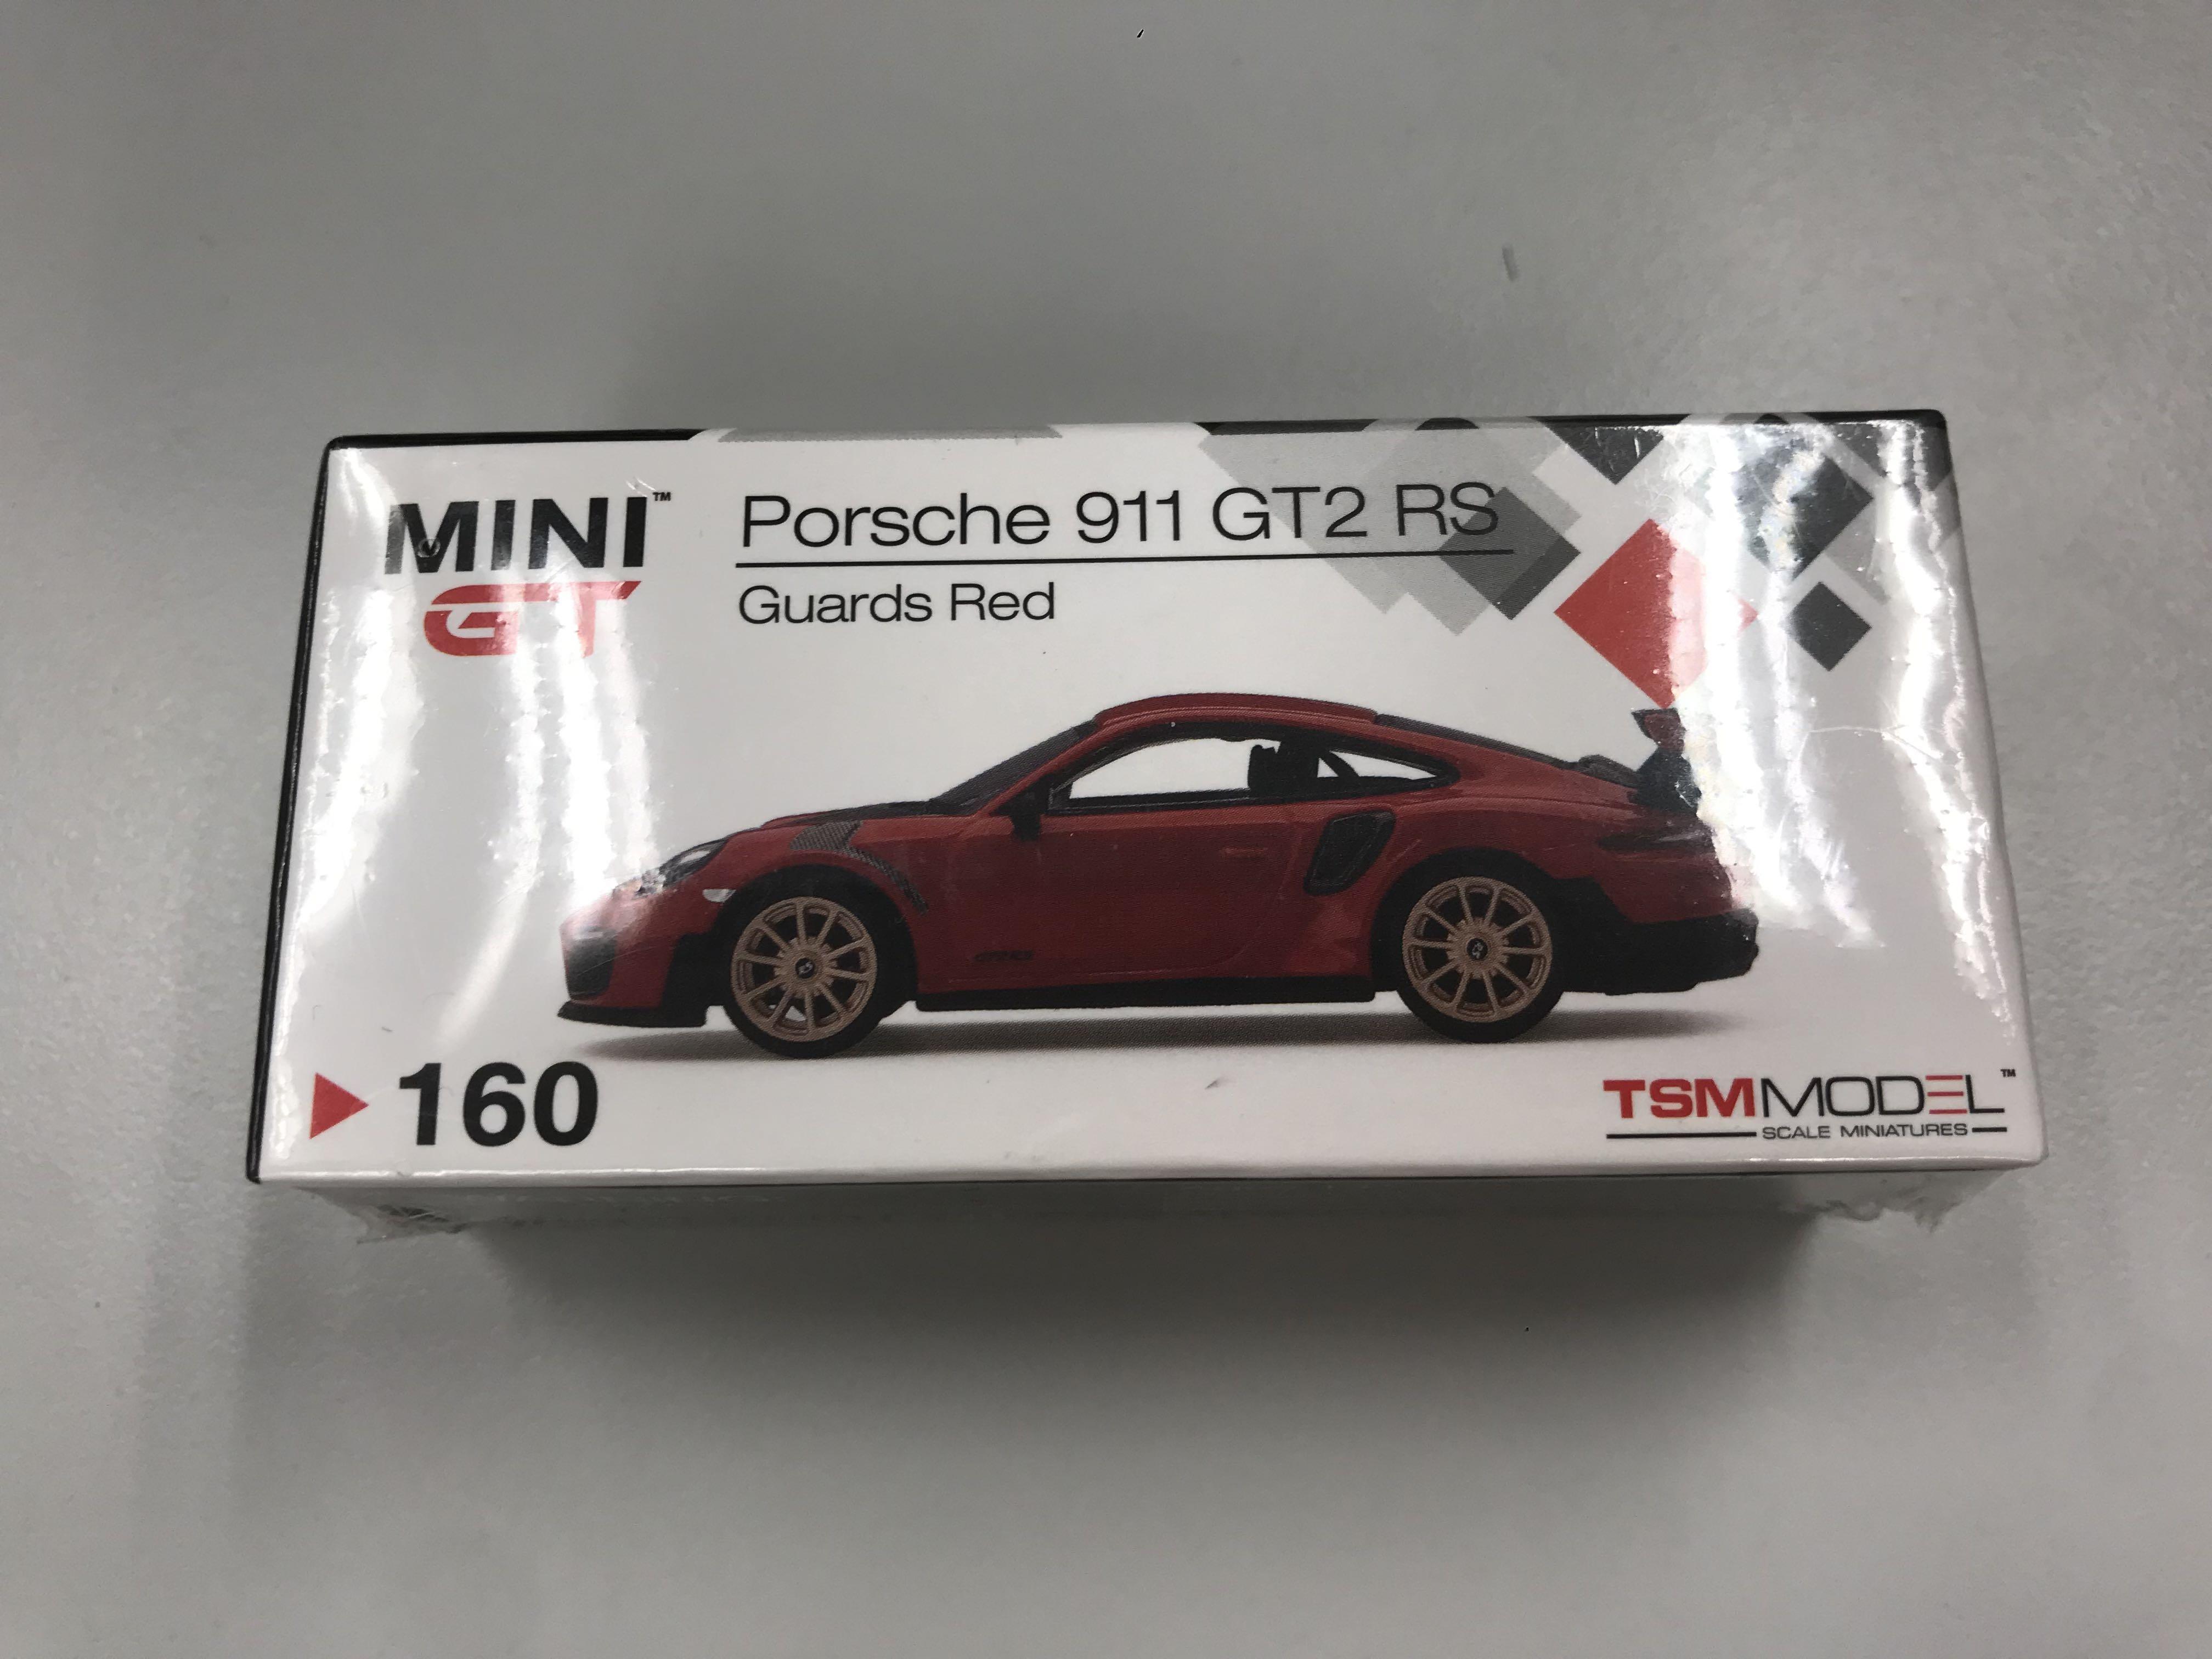 Mini GT Porsche 911 GT2 RS Taiwan exclusive minigt 1:64, 興趣及